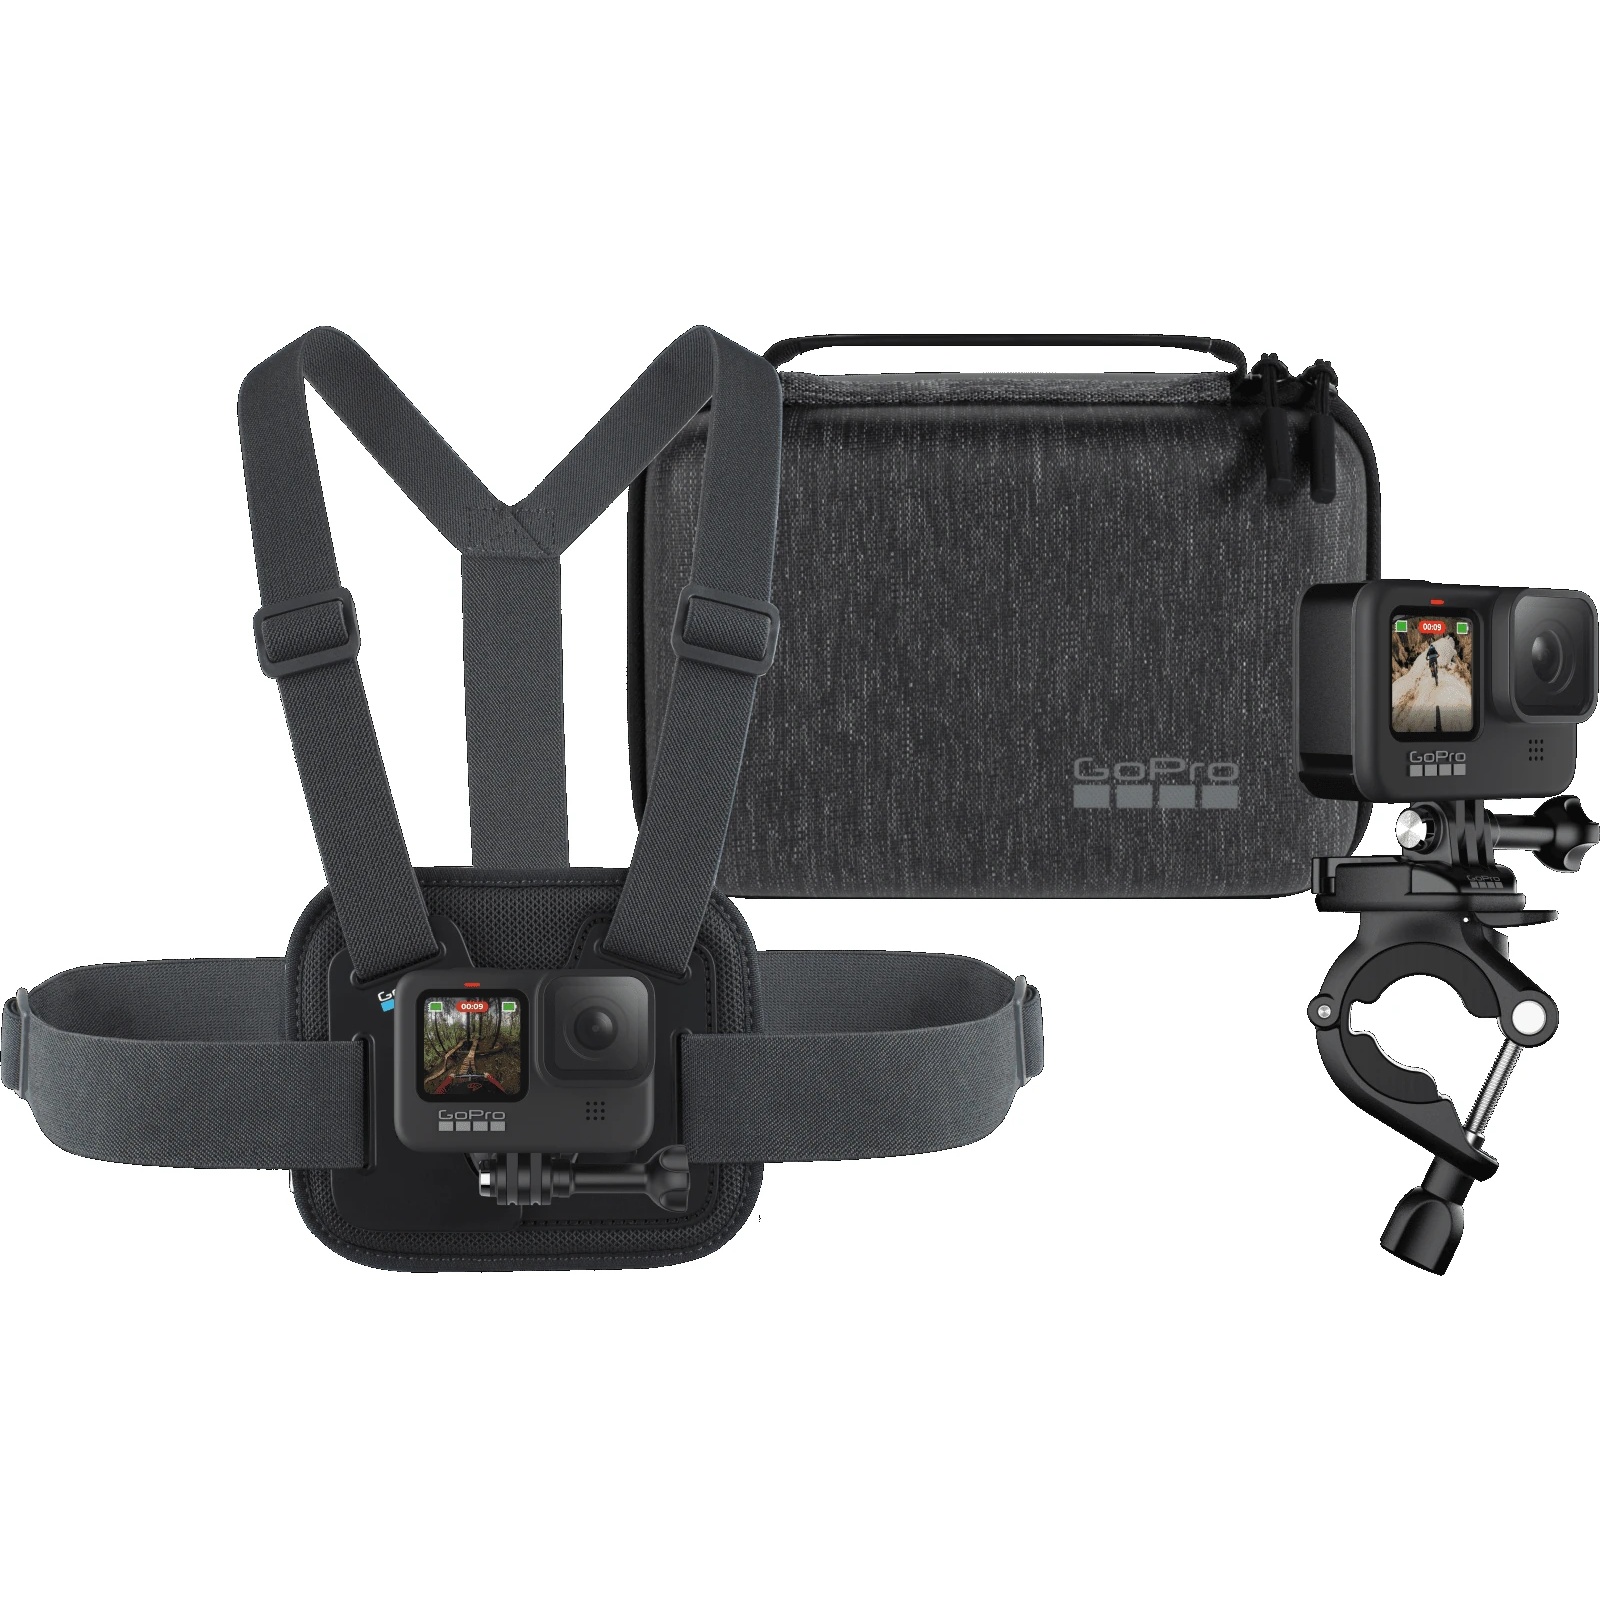 Productfoto van GoPro Sports Kit - Camera Holders